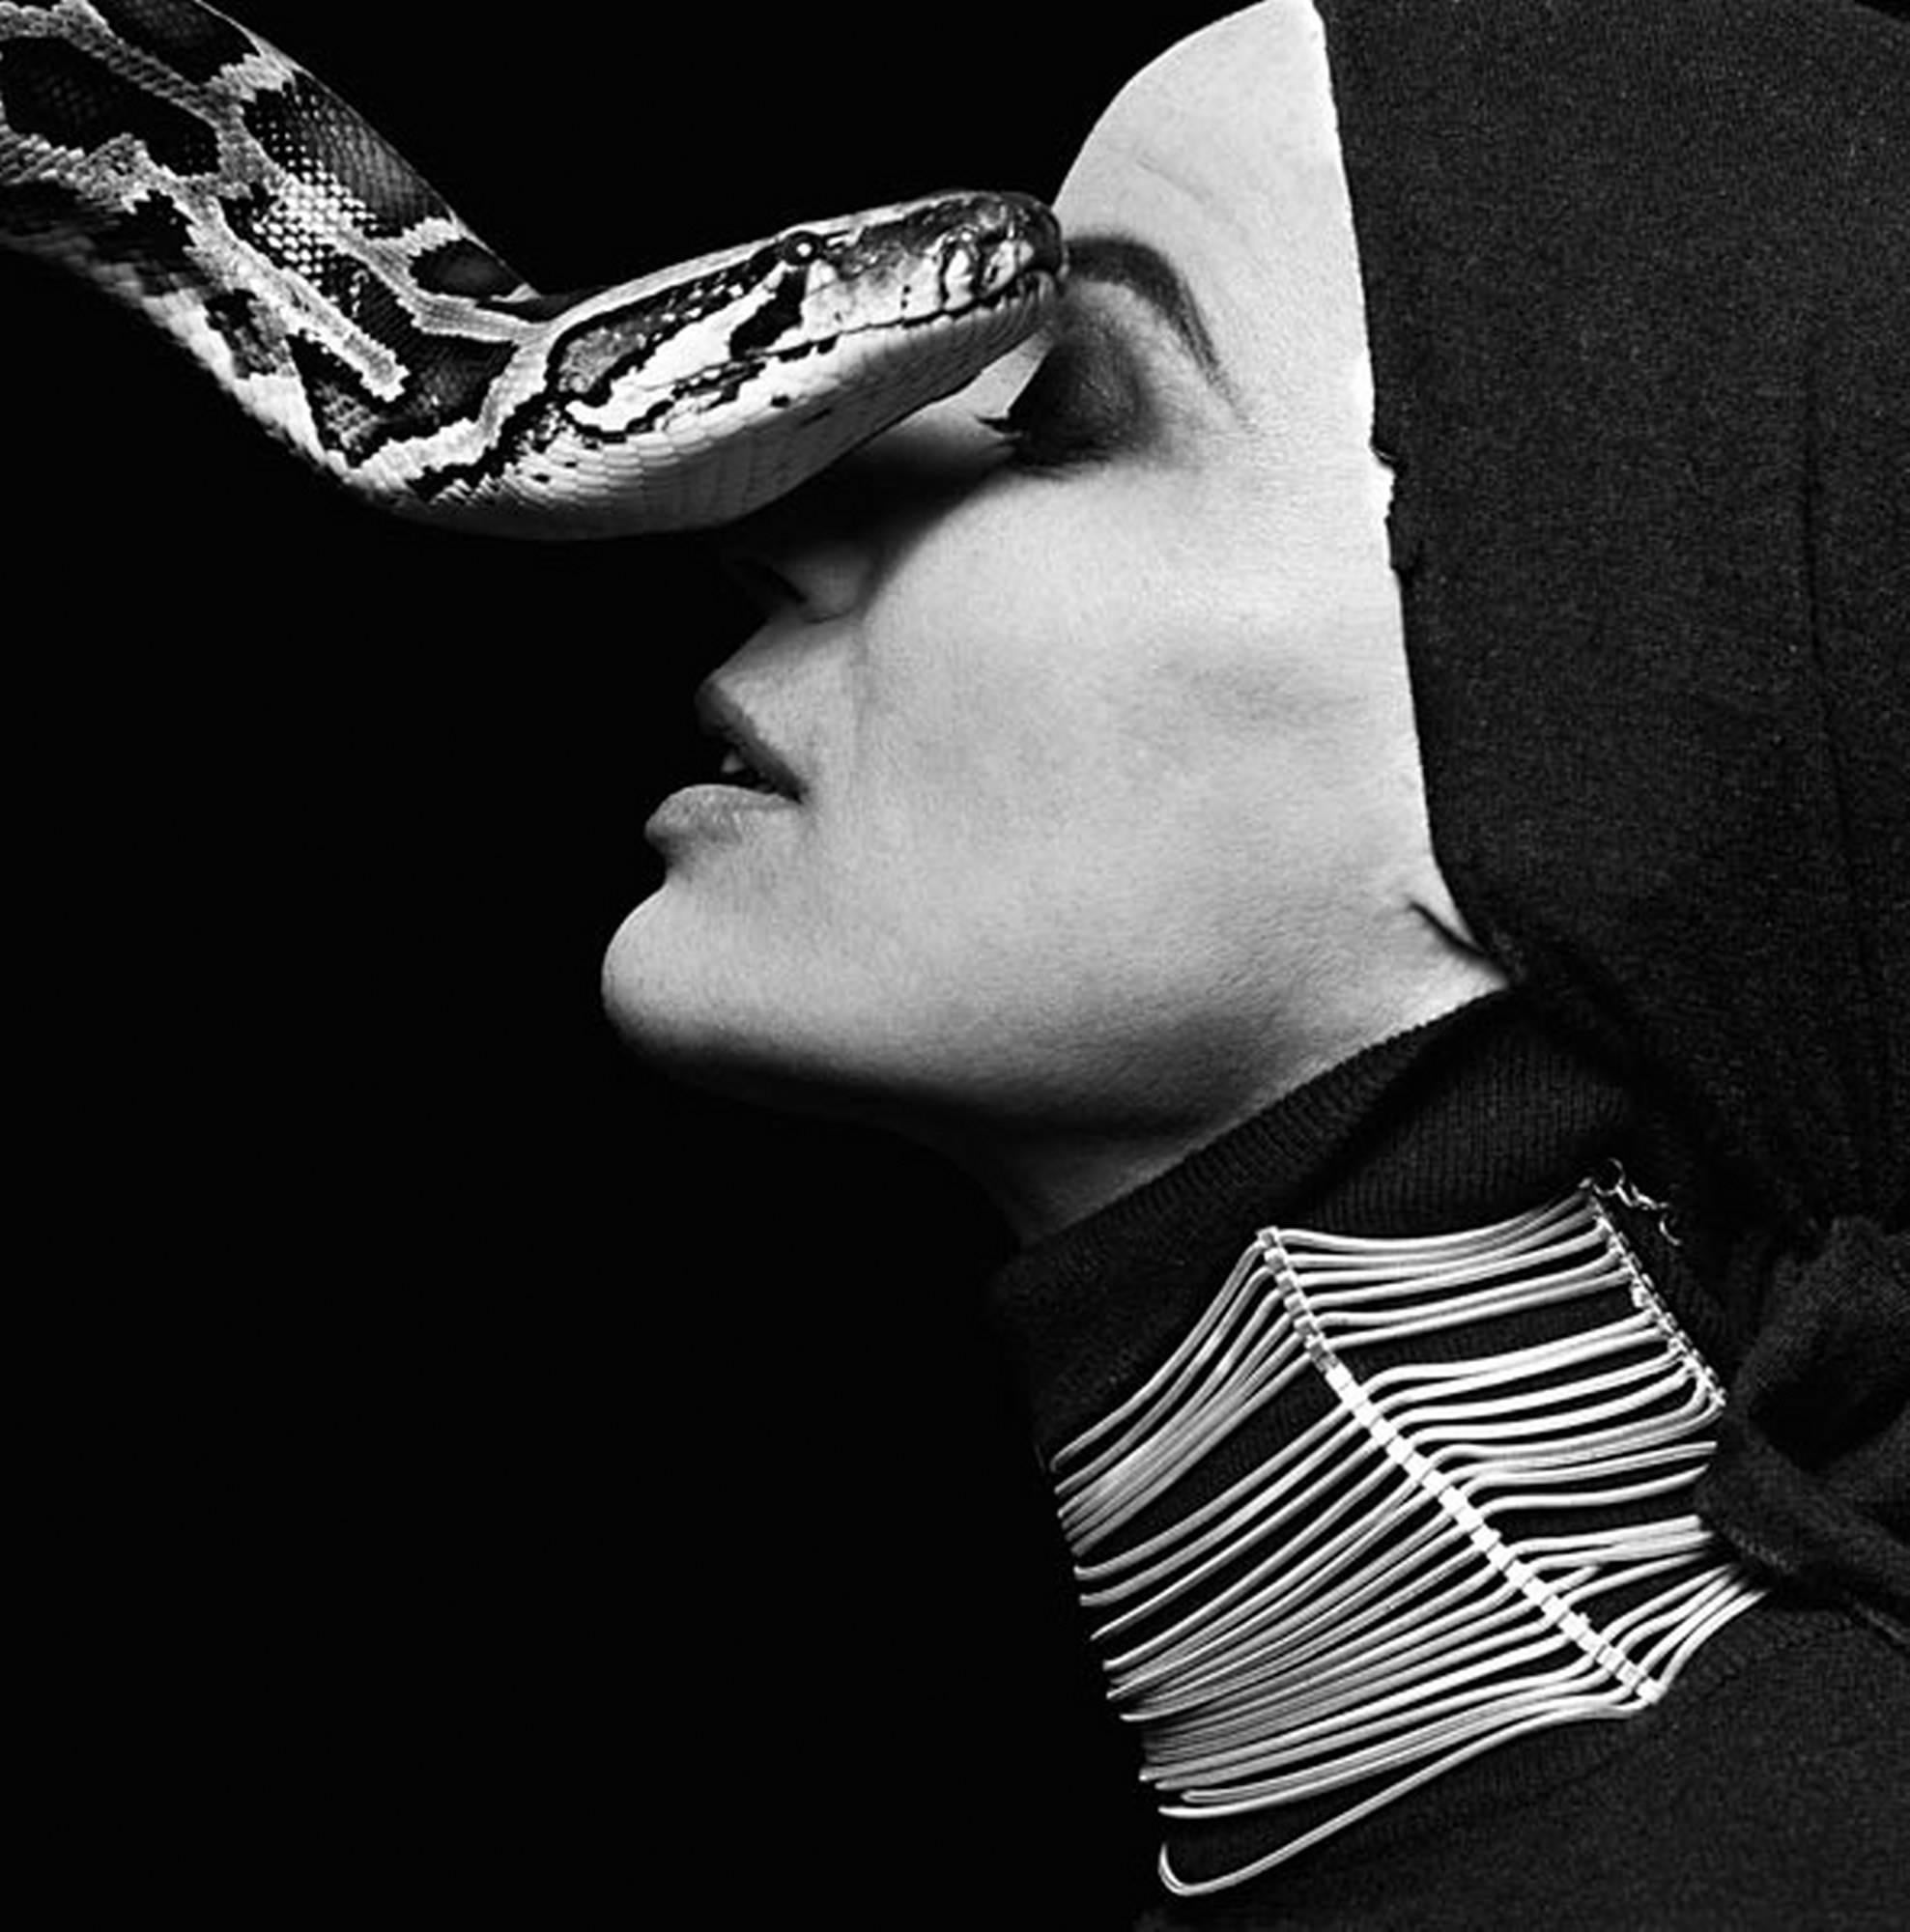 Michel Comte Black and White Photograph - Verushka with Snake